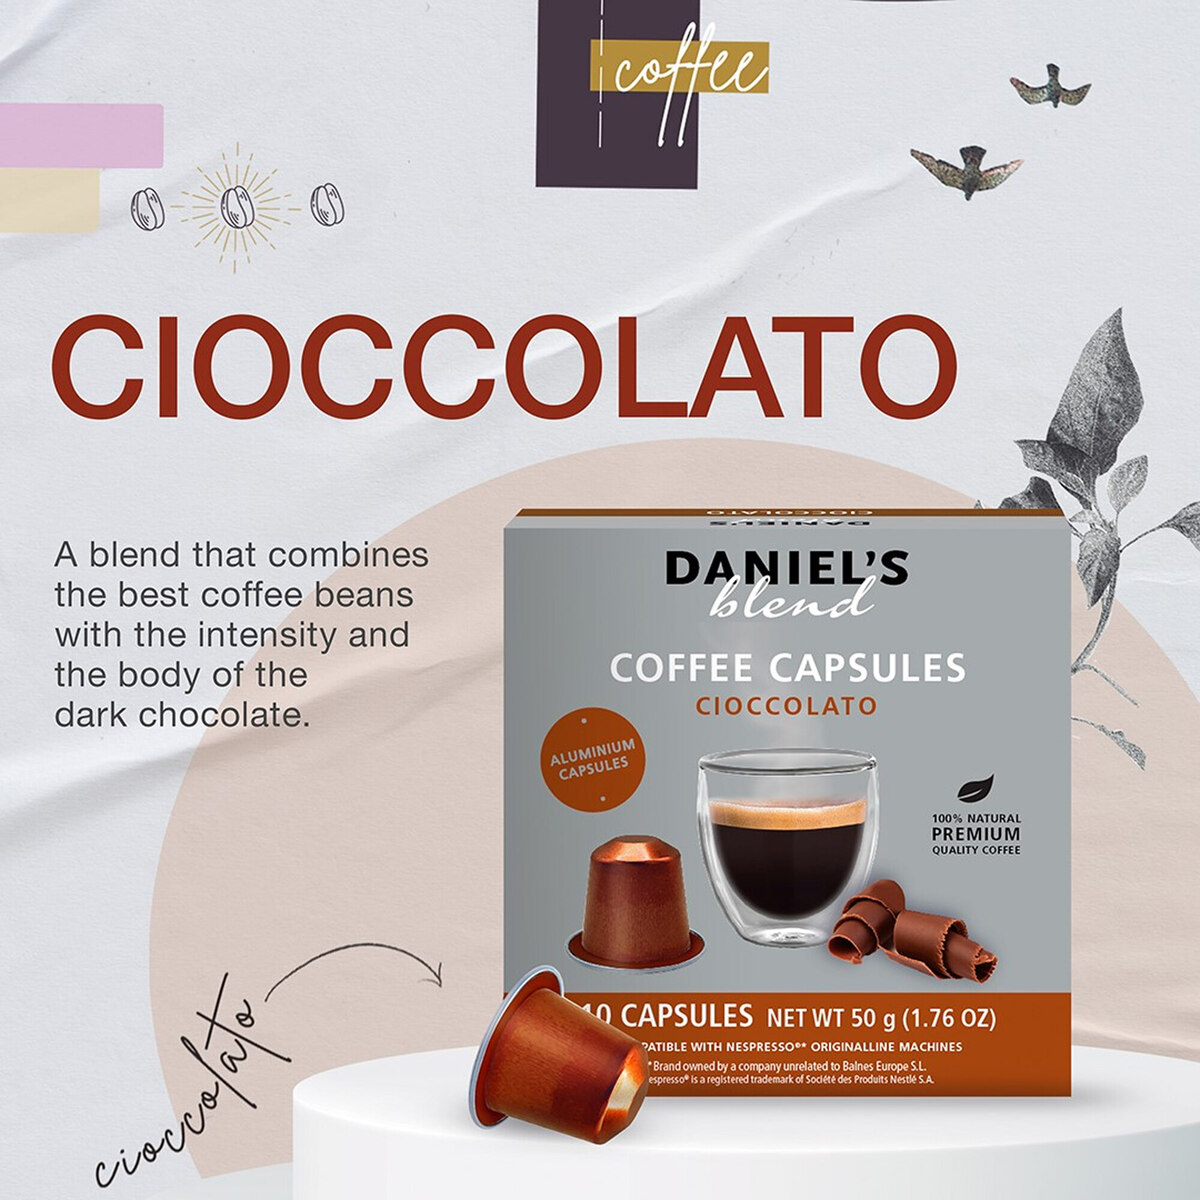 Daniel's Blend Cioccolato Coffee Capsules 10 pcs 50 g